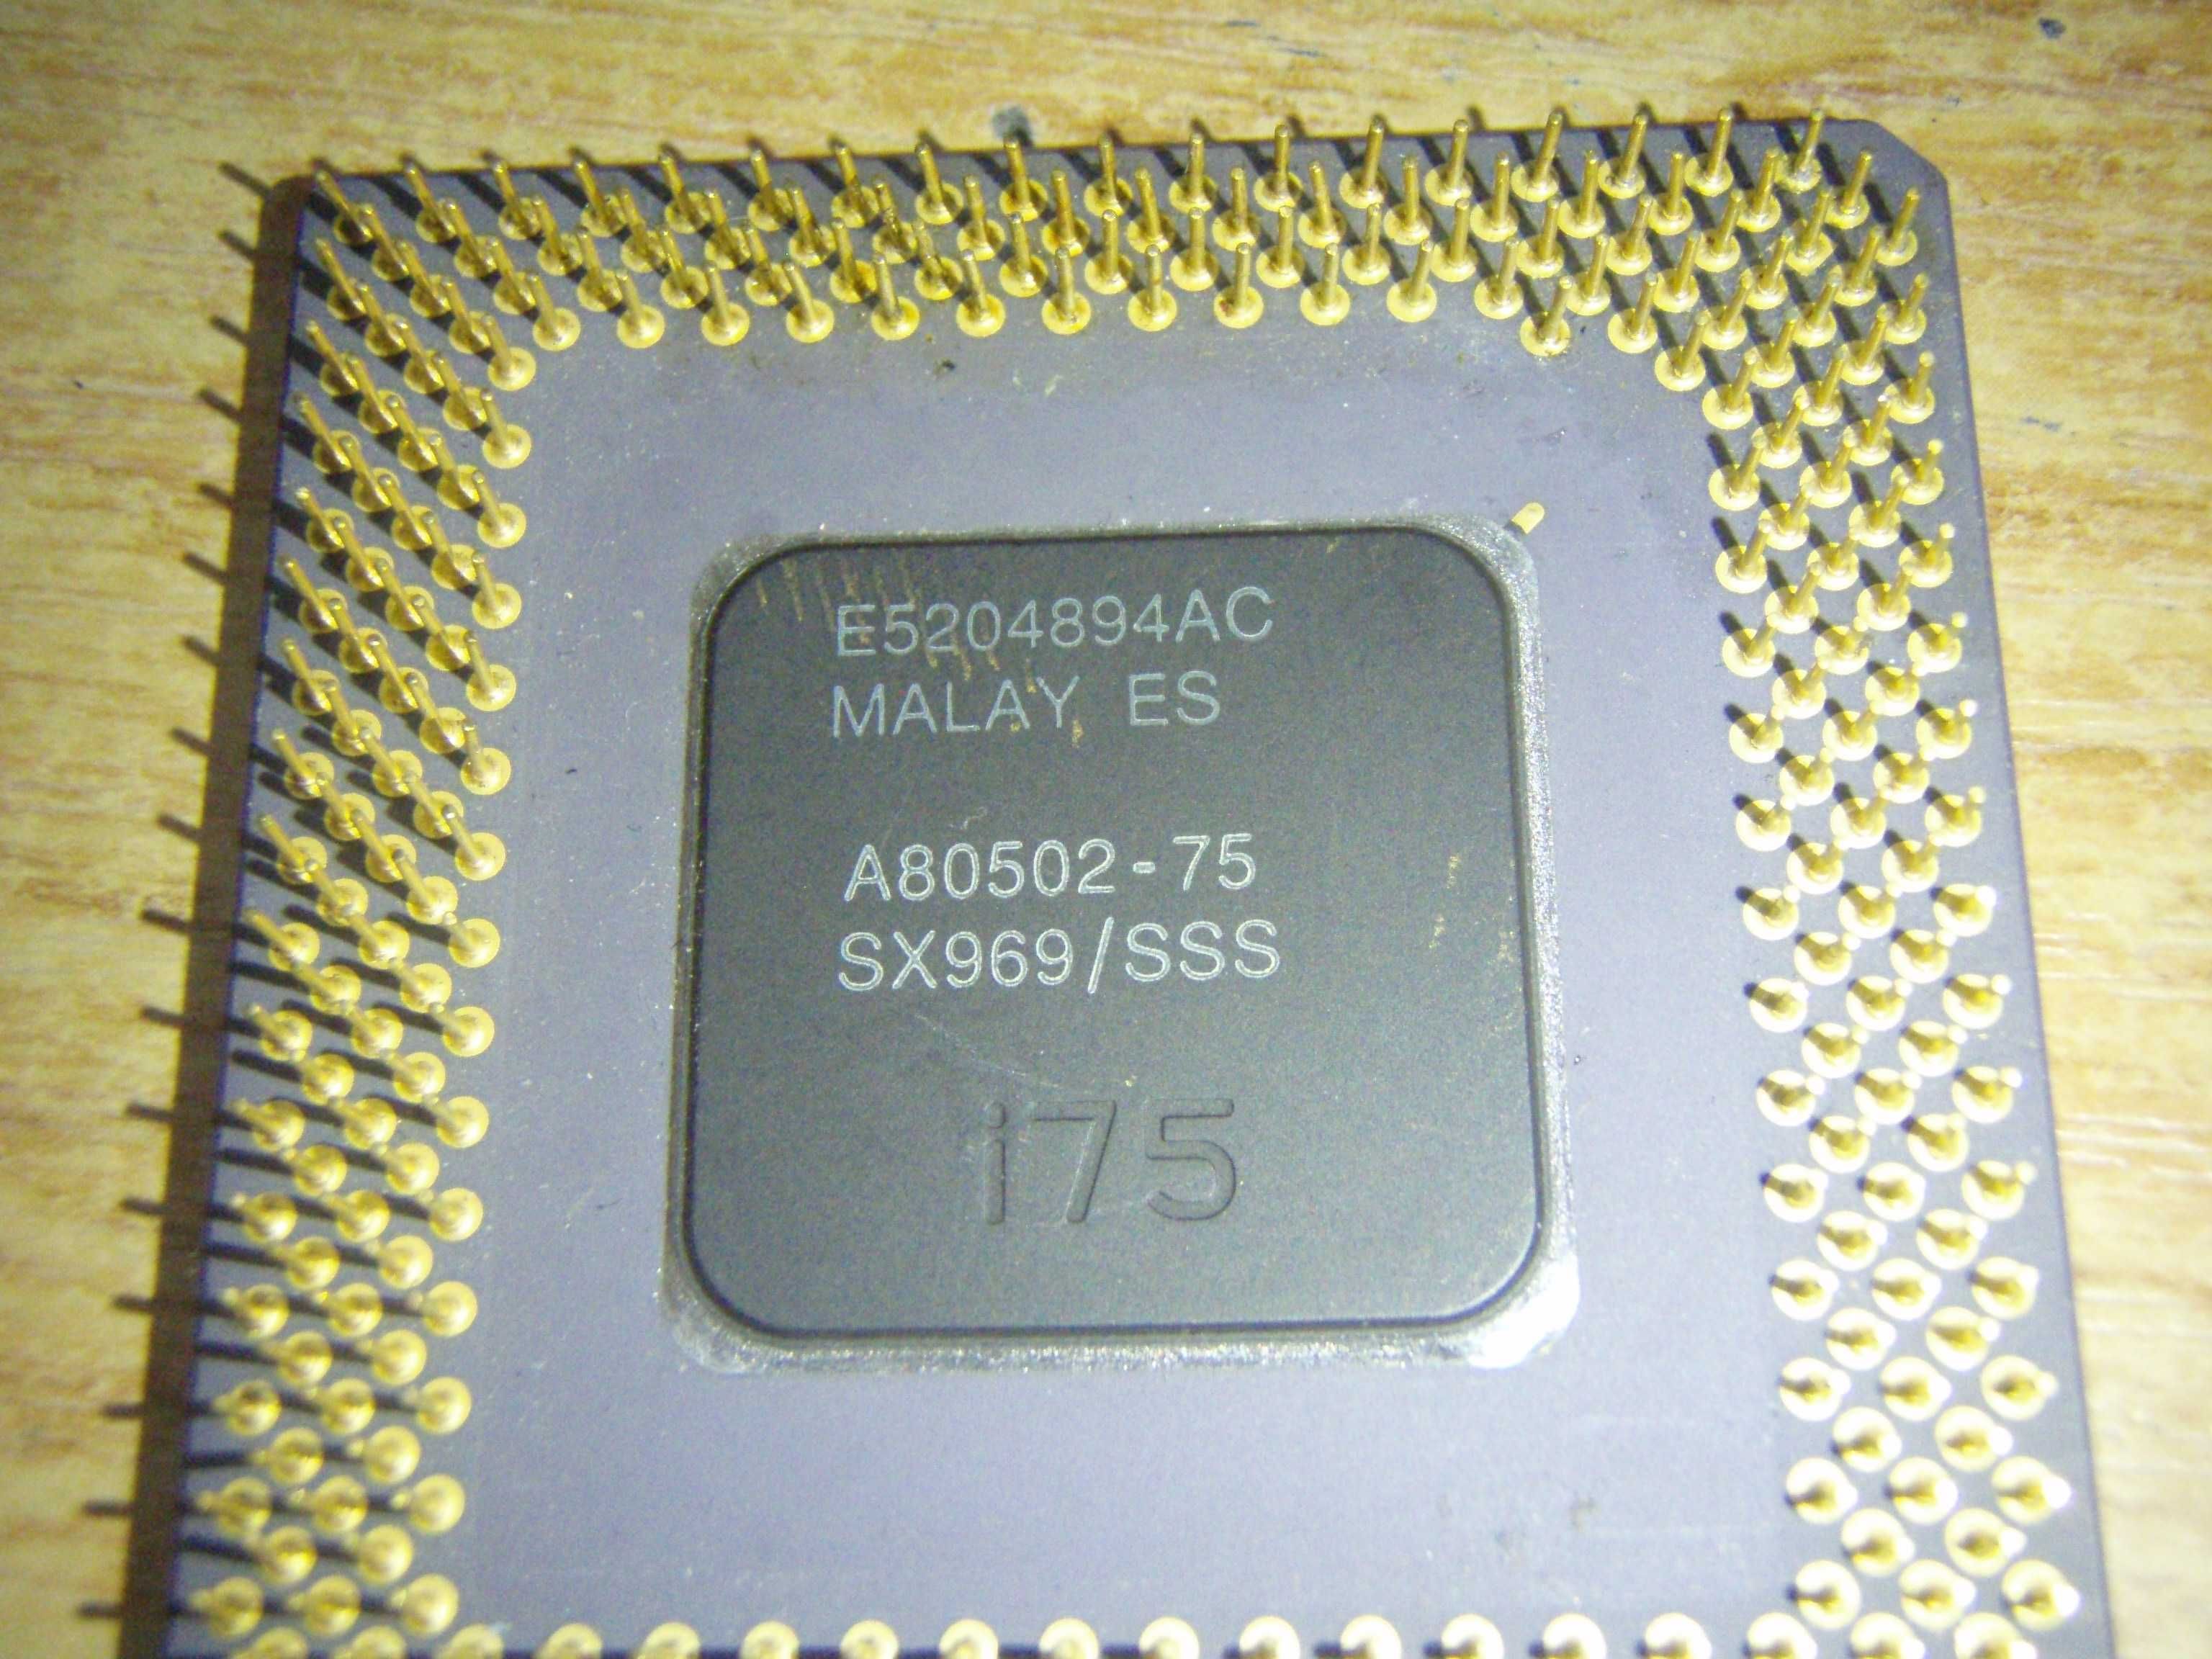 Procesor intel Pentium 75 A80502-75 SX969, colectie sau recuperare aur